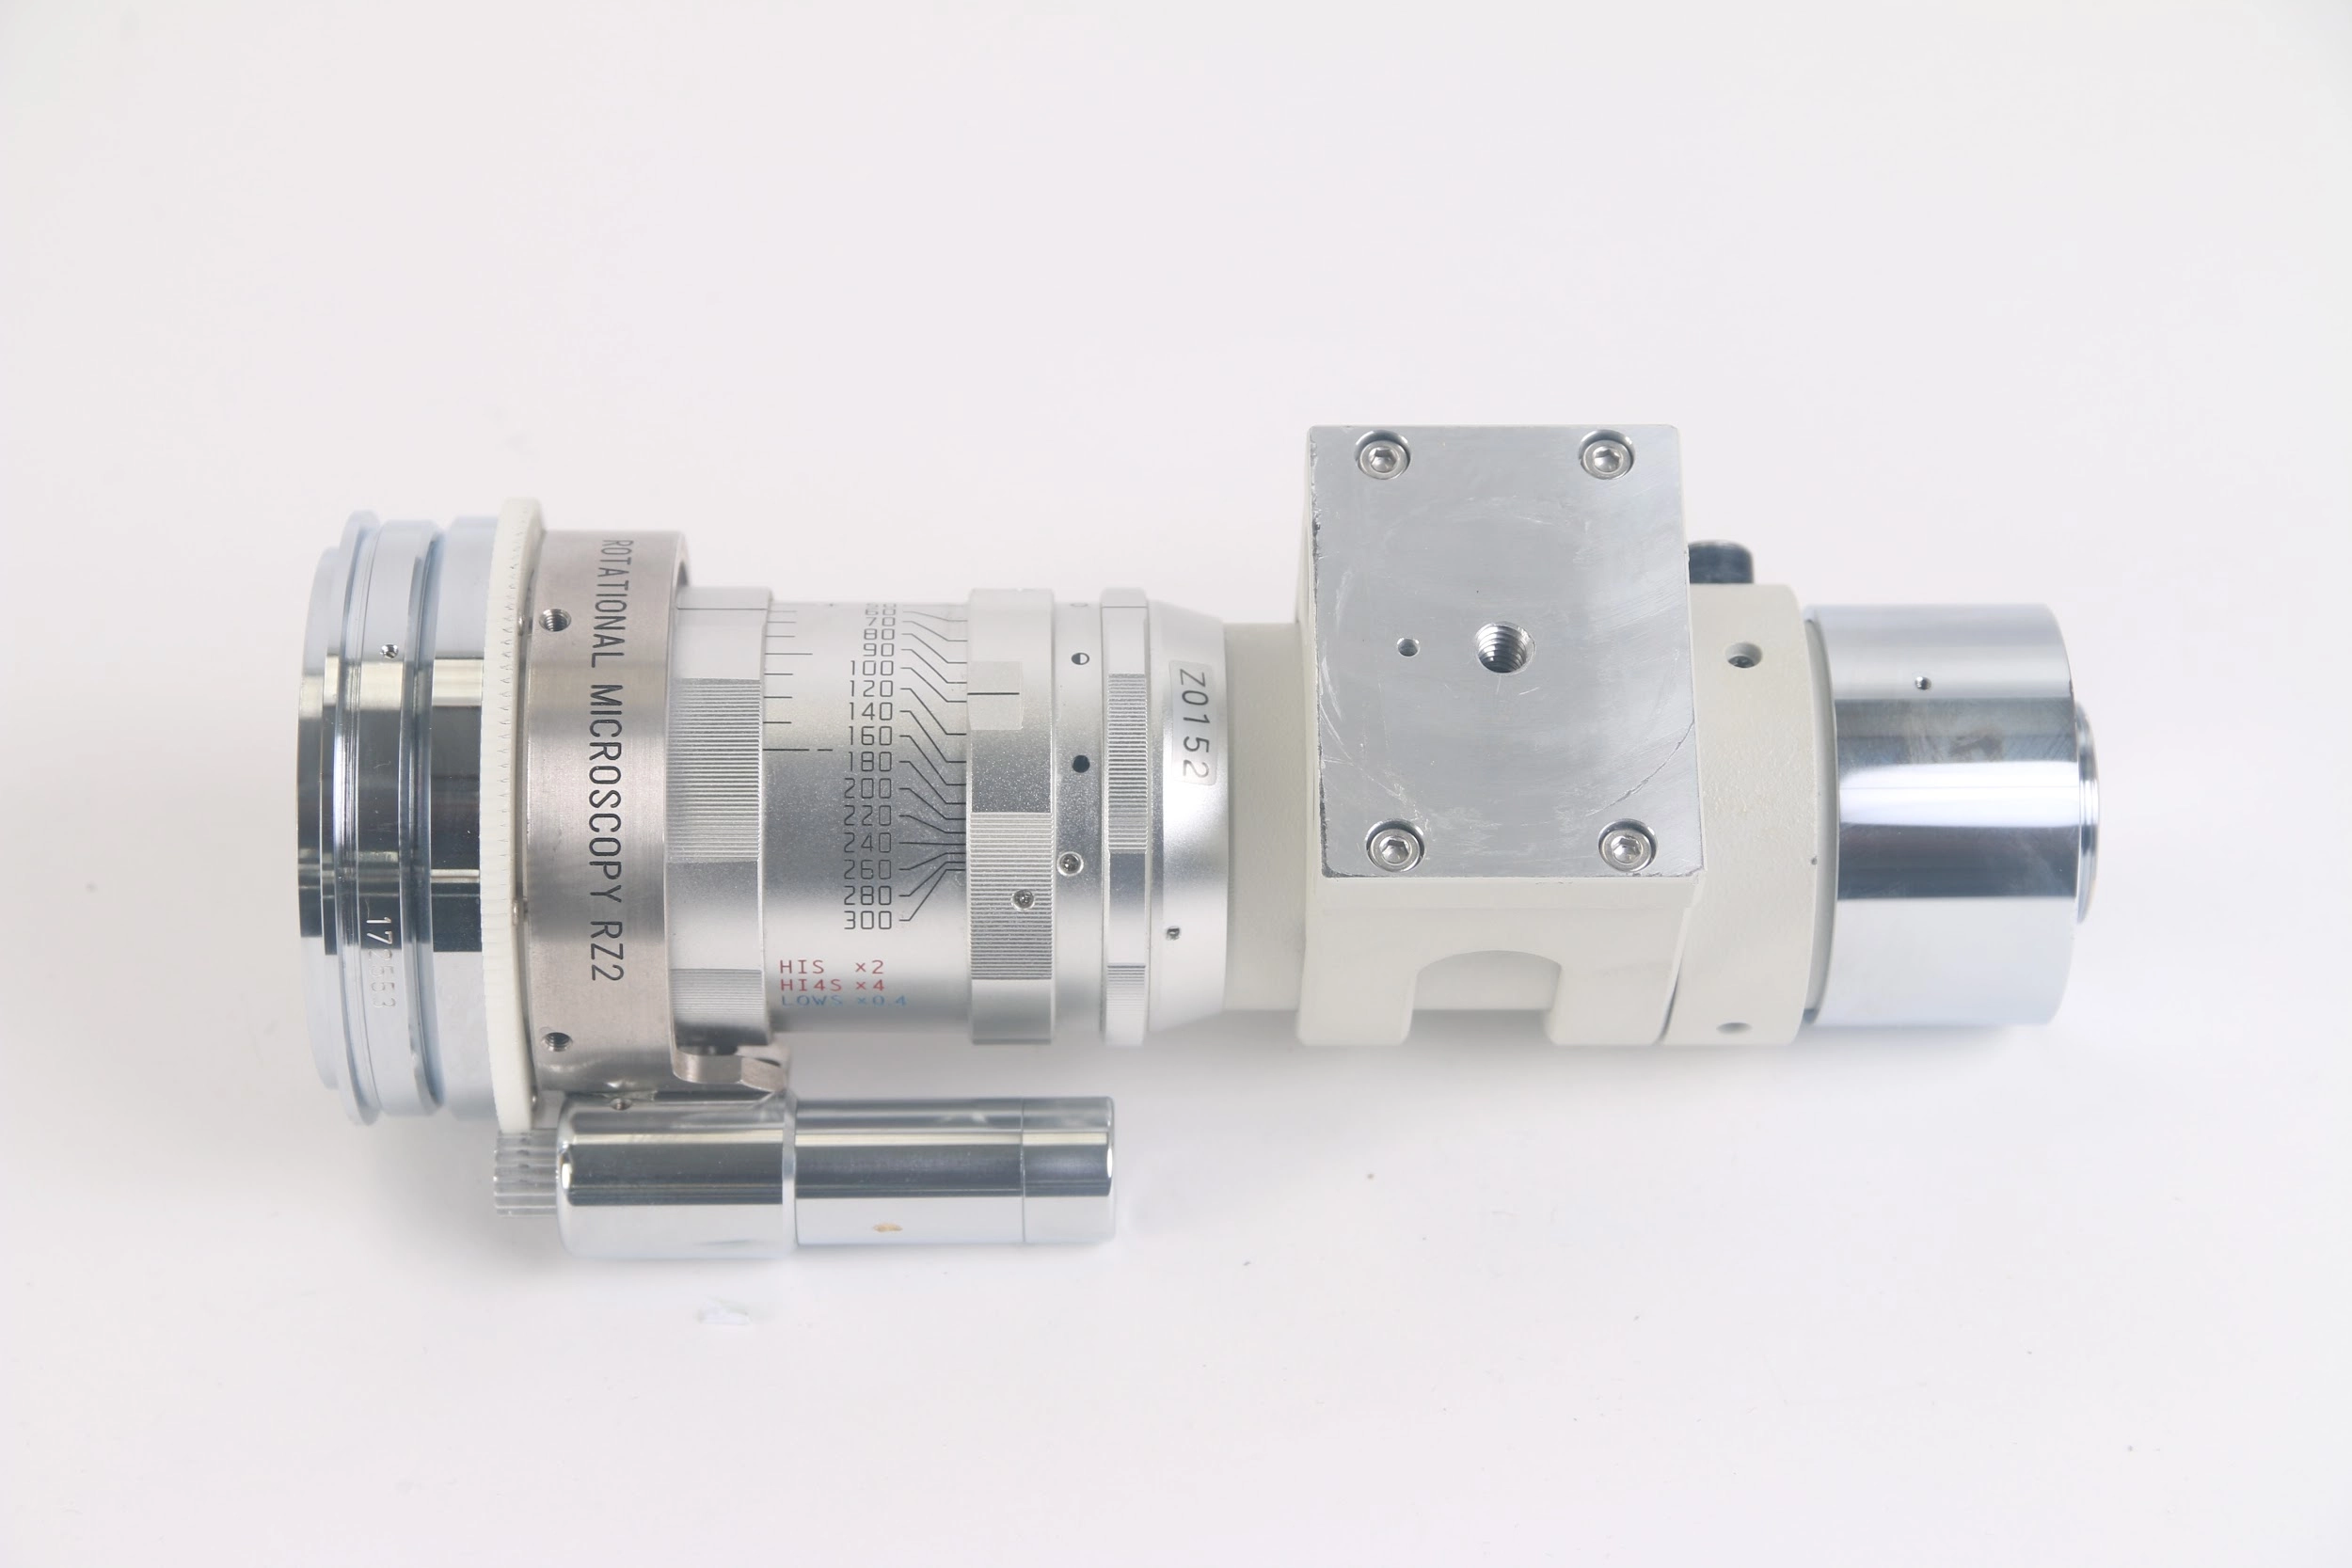 Hirox CX-5030RZ Microscope Lens W/ 3D Encoder Mount